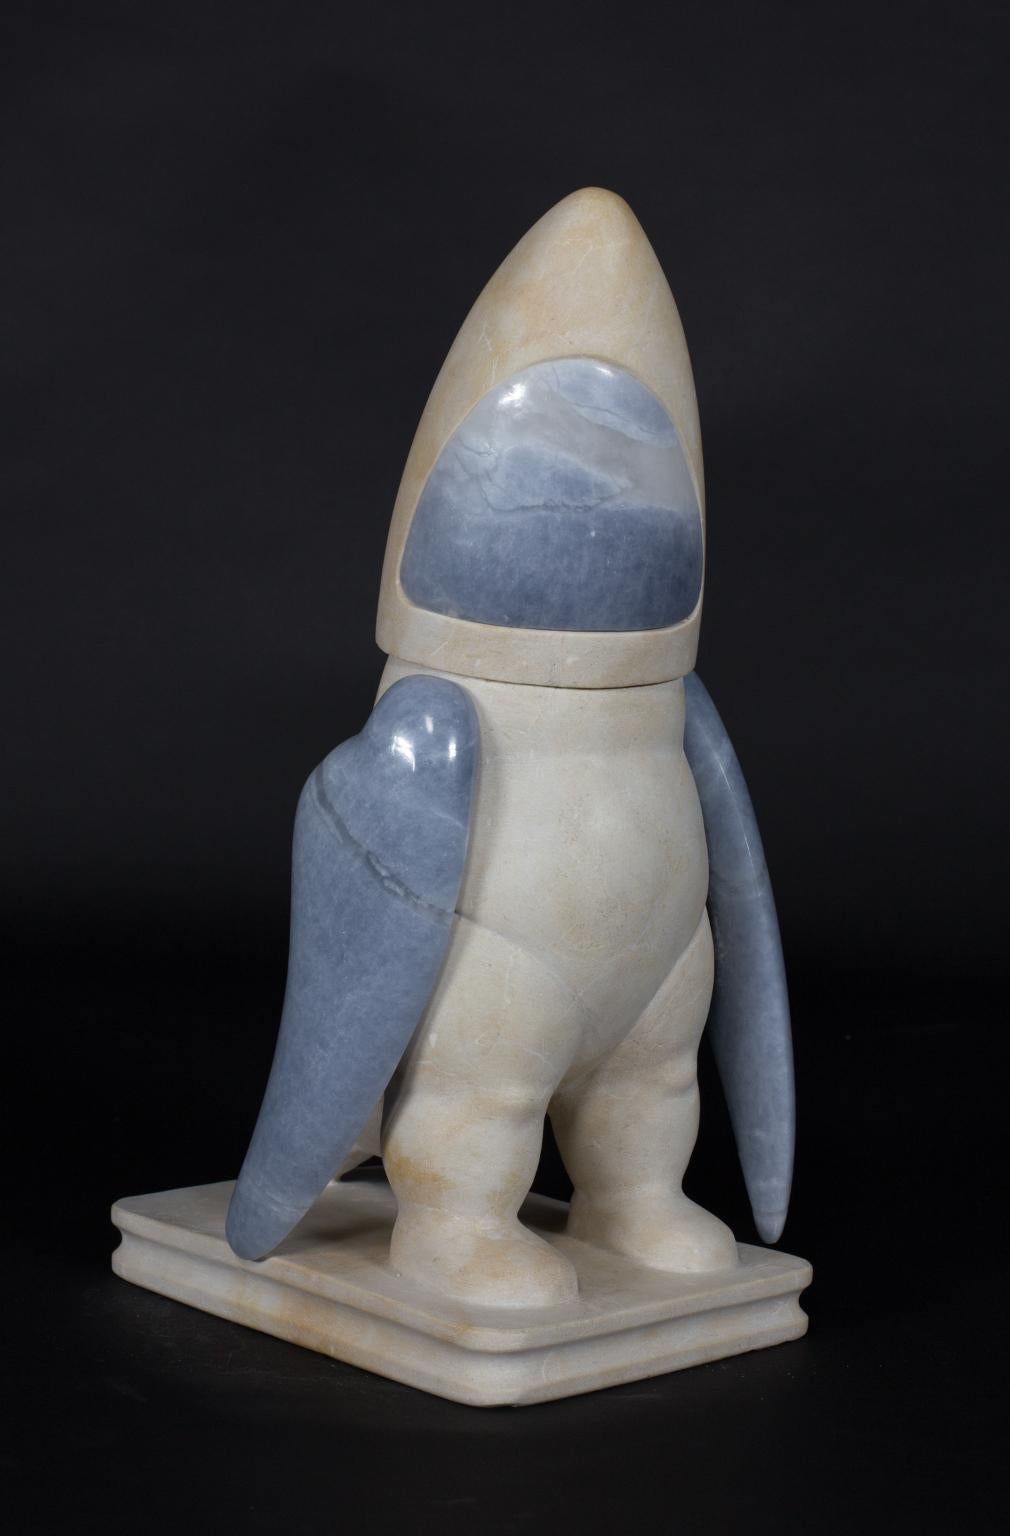 New Age Explorers: The Shark. Figurative Marble Sculpture by Mario Romero - Art by Mario Romero Fernández